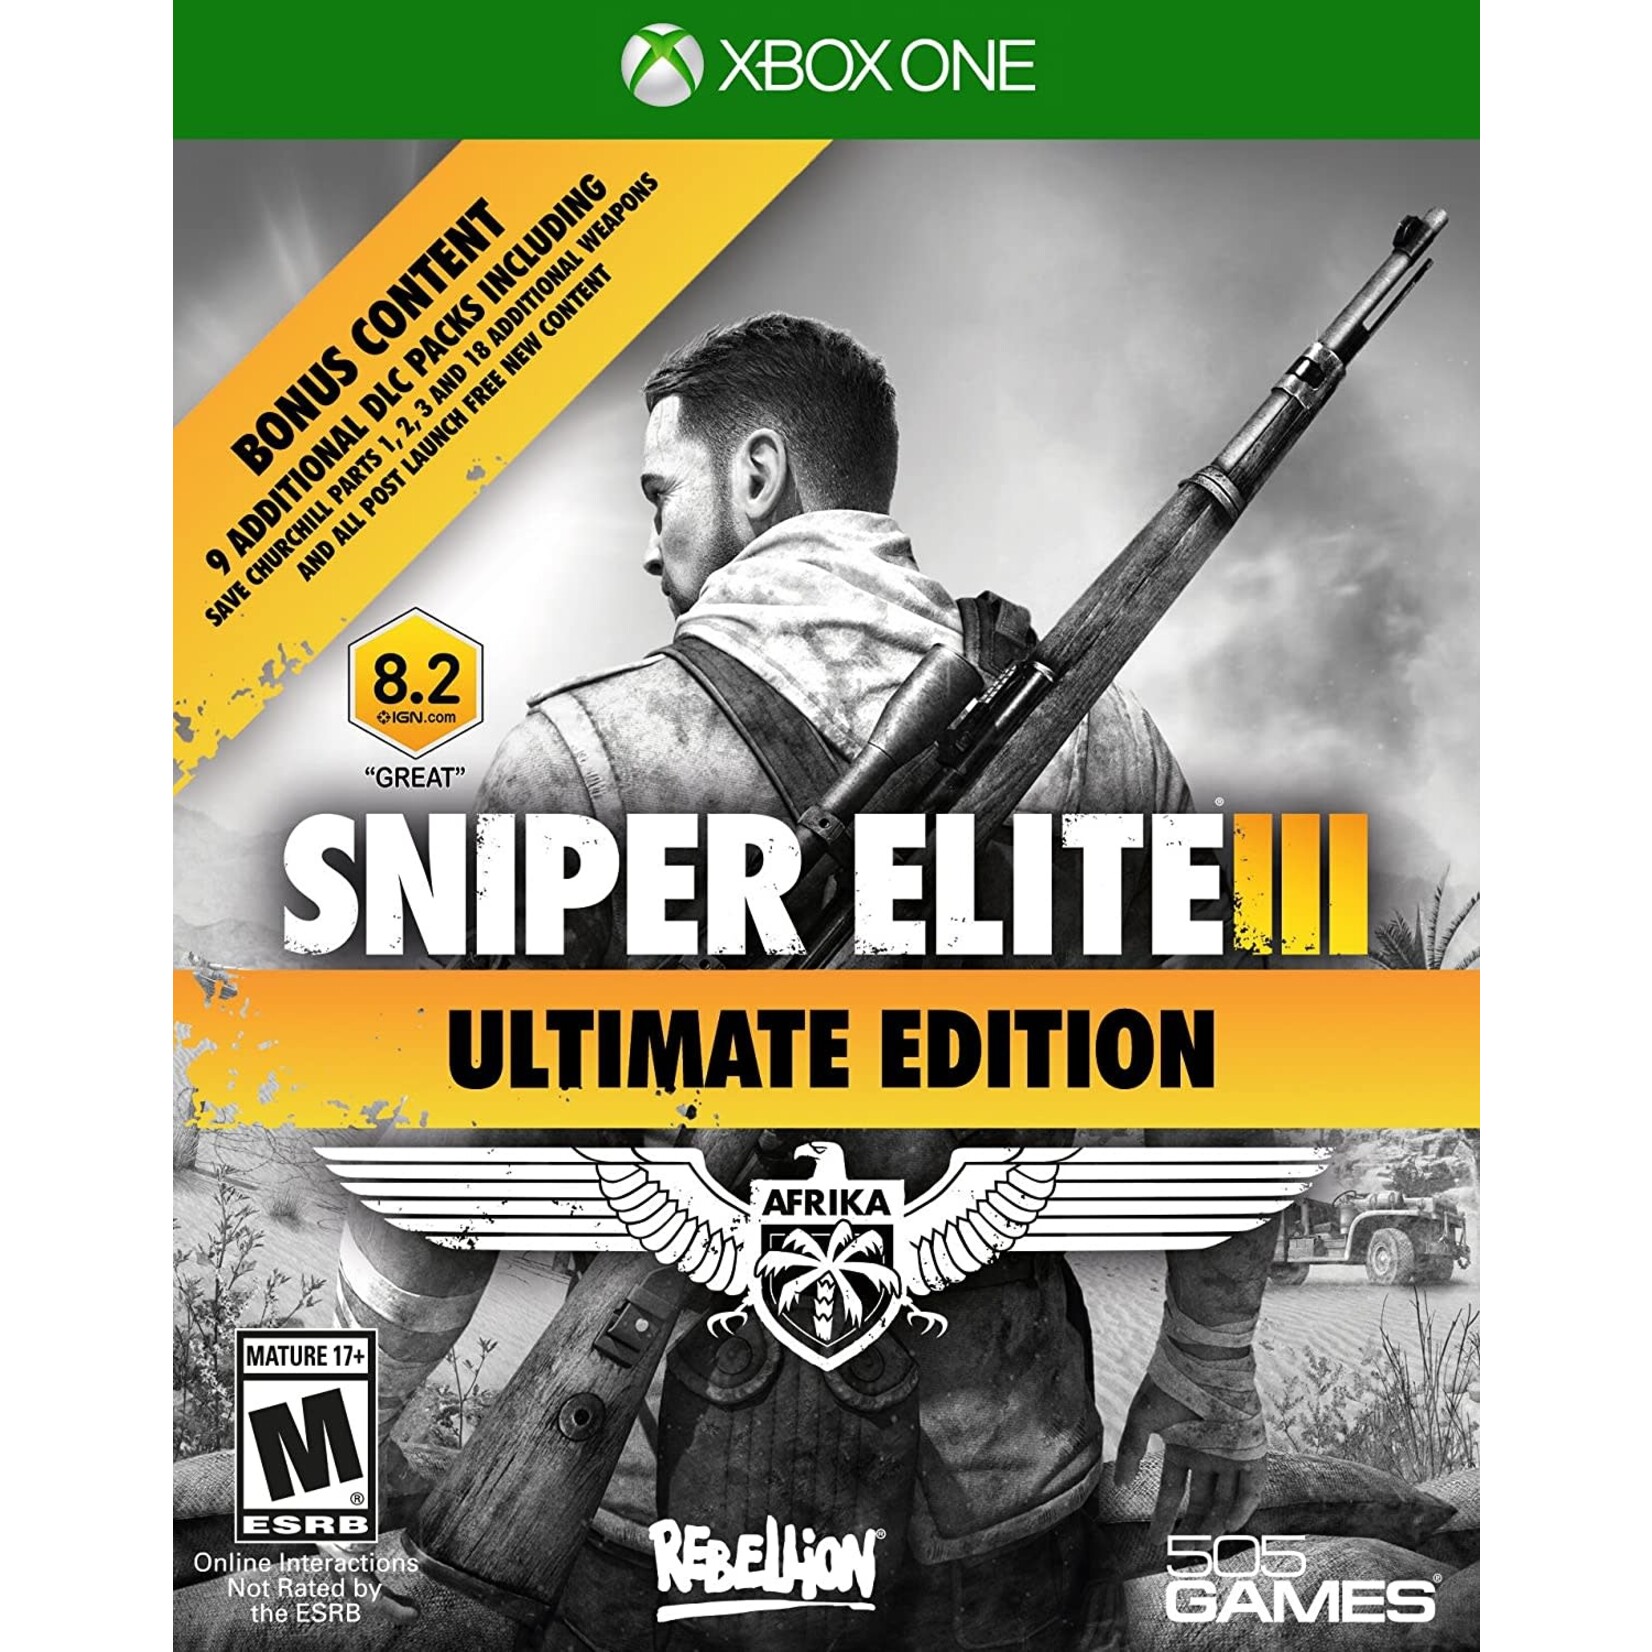 XB1U-Sniper Elite III Ultimate Edition